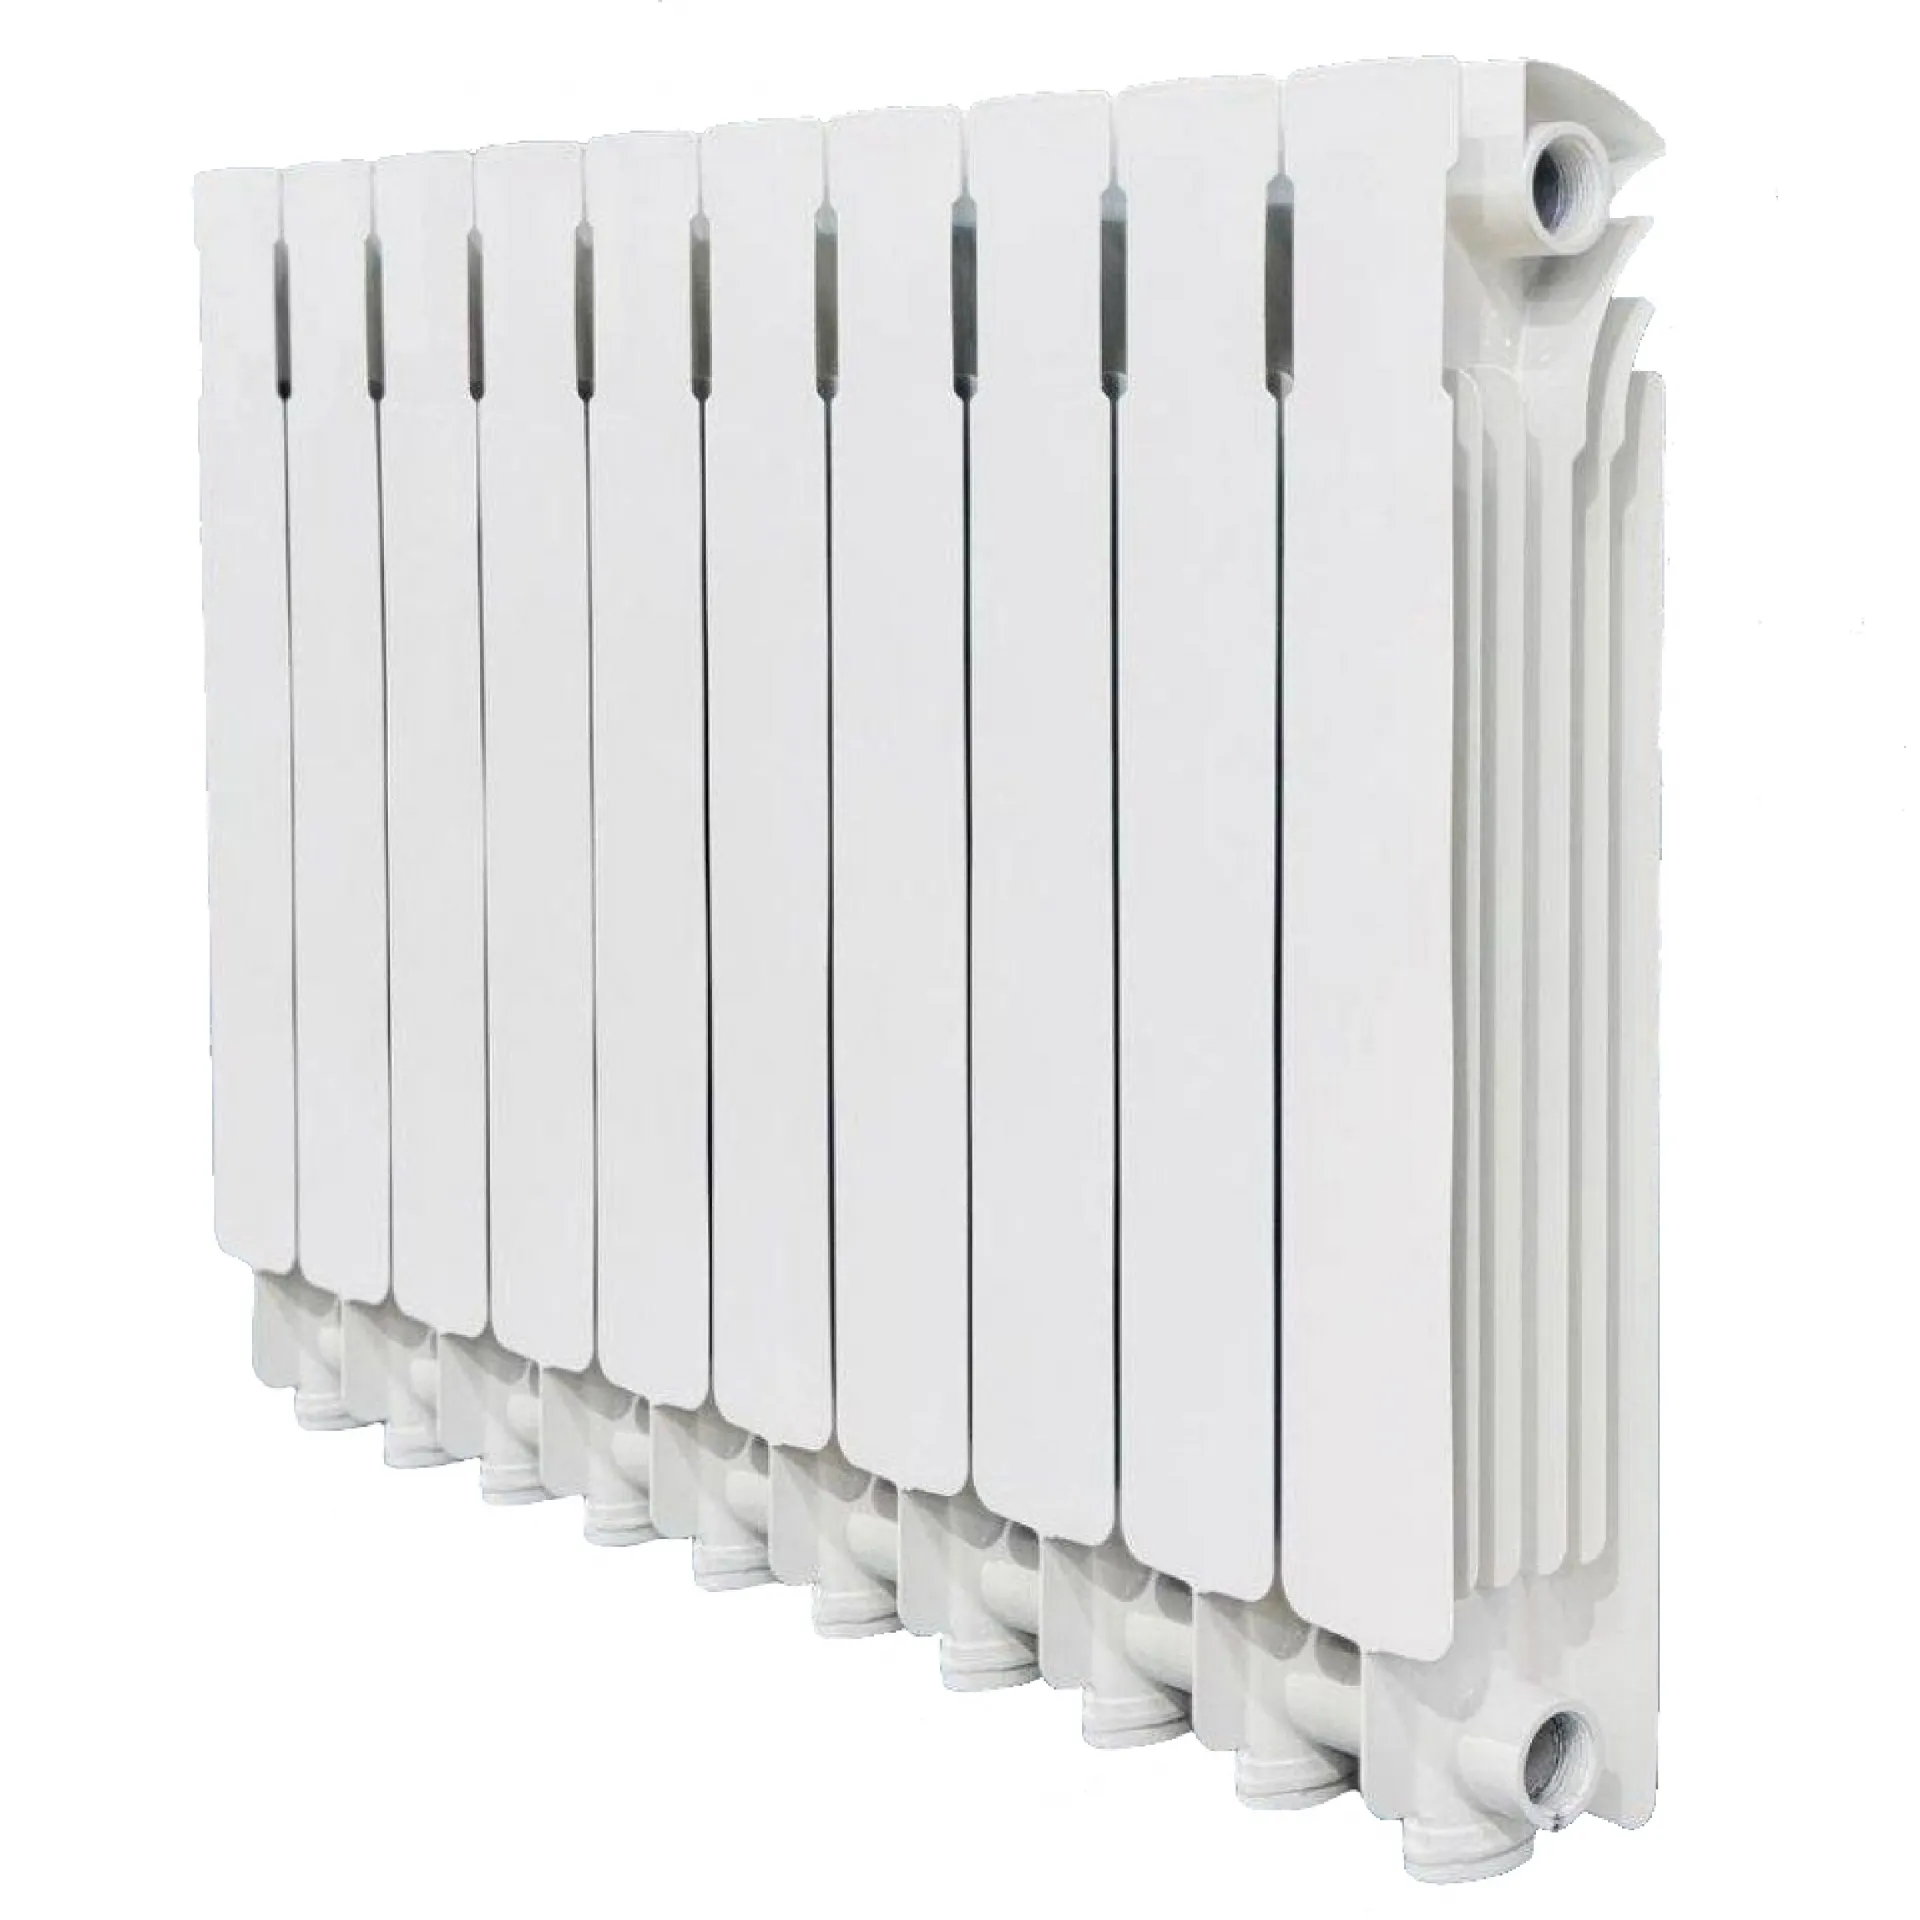 Alyumin radiator#2